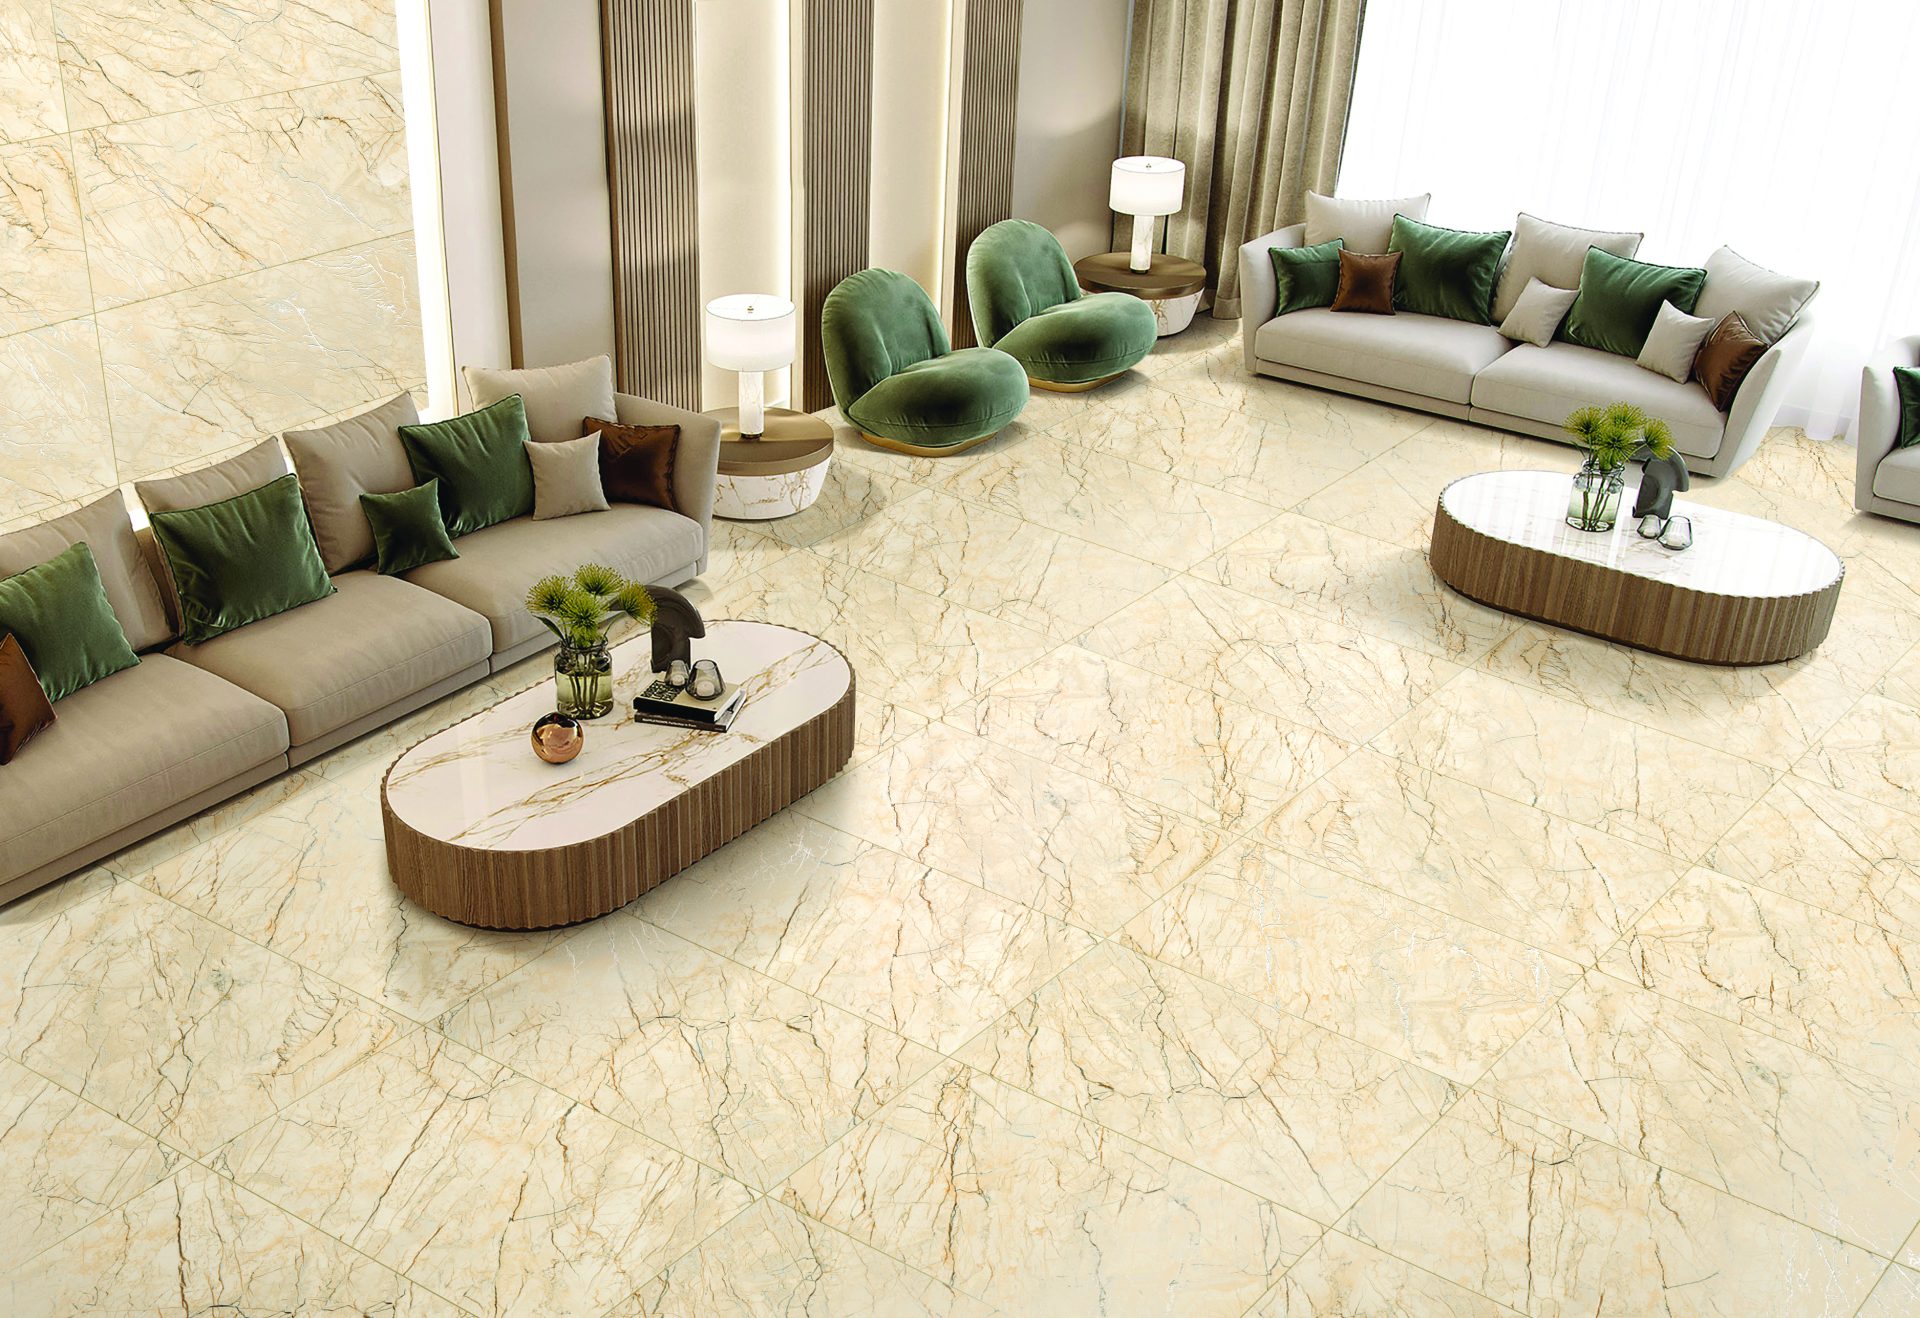 Modern Floor Tiles Design | Living Room Floor Tiles | Bedroom Floor Tiles |  Vitrified Tiles Colors - YouTube